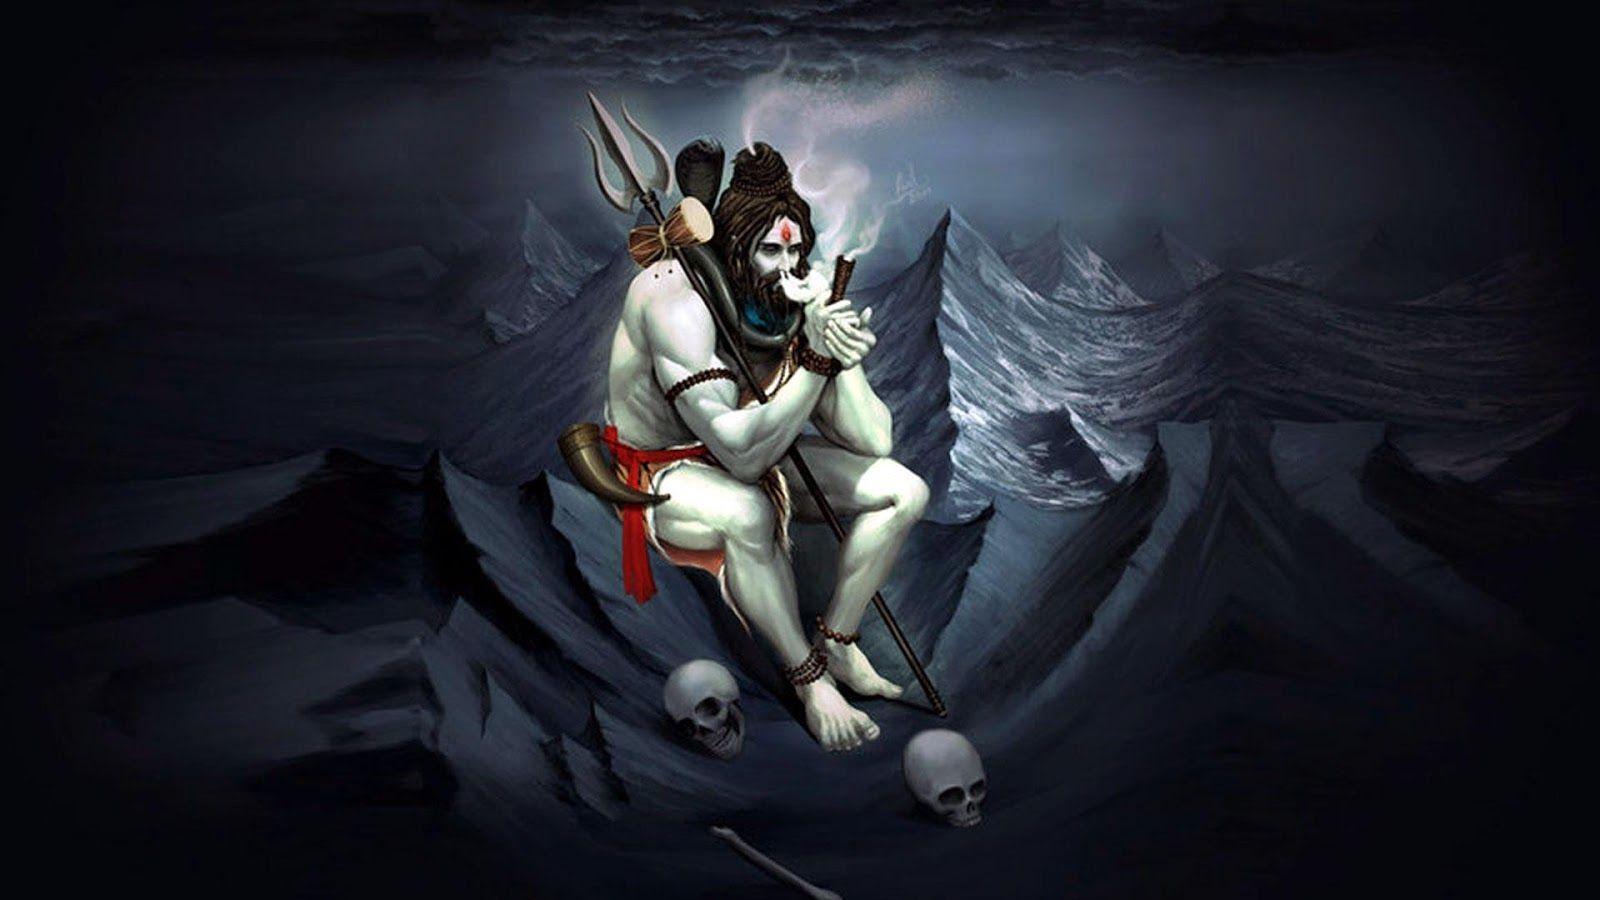 Lord Shiva image, wallpapers, photos & pics, download Lord Shiva hd